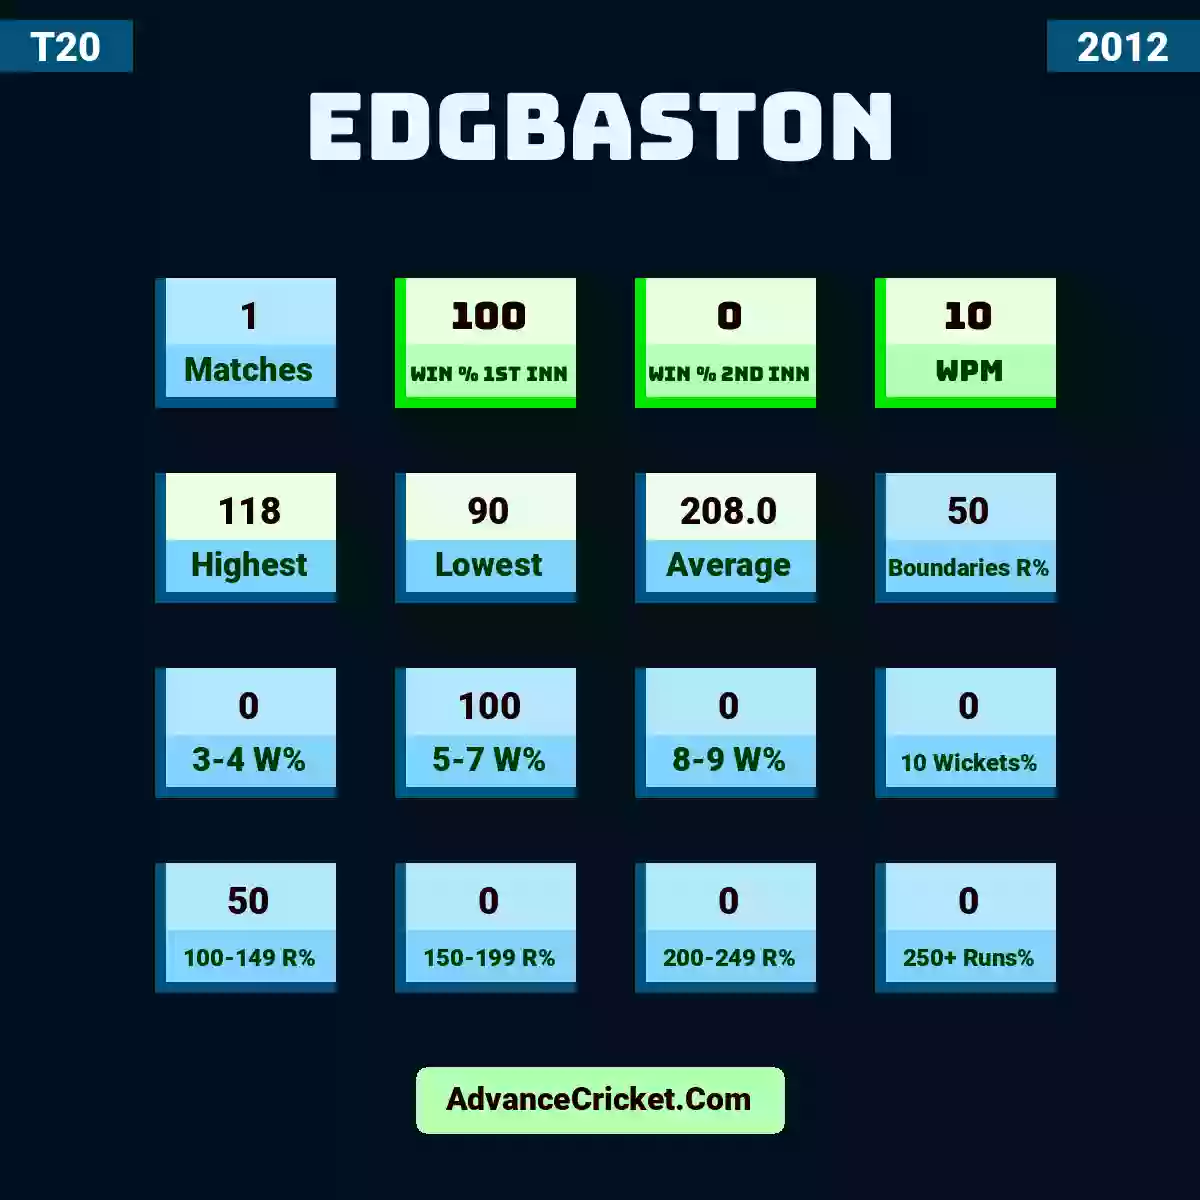 Image showing Edgbaston with Matches: 1, Win % 1st Inn: 100, Win % 2nd Inn: 0, WPM: 10, Highest: 118, Lowest: 90, Average: 208.0, Boundaries R%: 50, 3-4 W%: 0, 5-7 W%: 100, 8-9 W%: 0, 10 Wickets%: 0, 100-149 R%: 50, 150-199 R%: 0, 200-249 R%: 0, 250+ Runs%: 0.